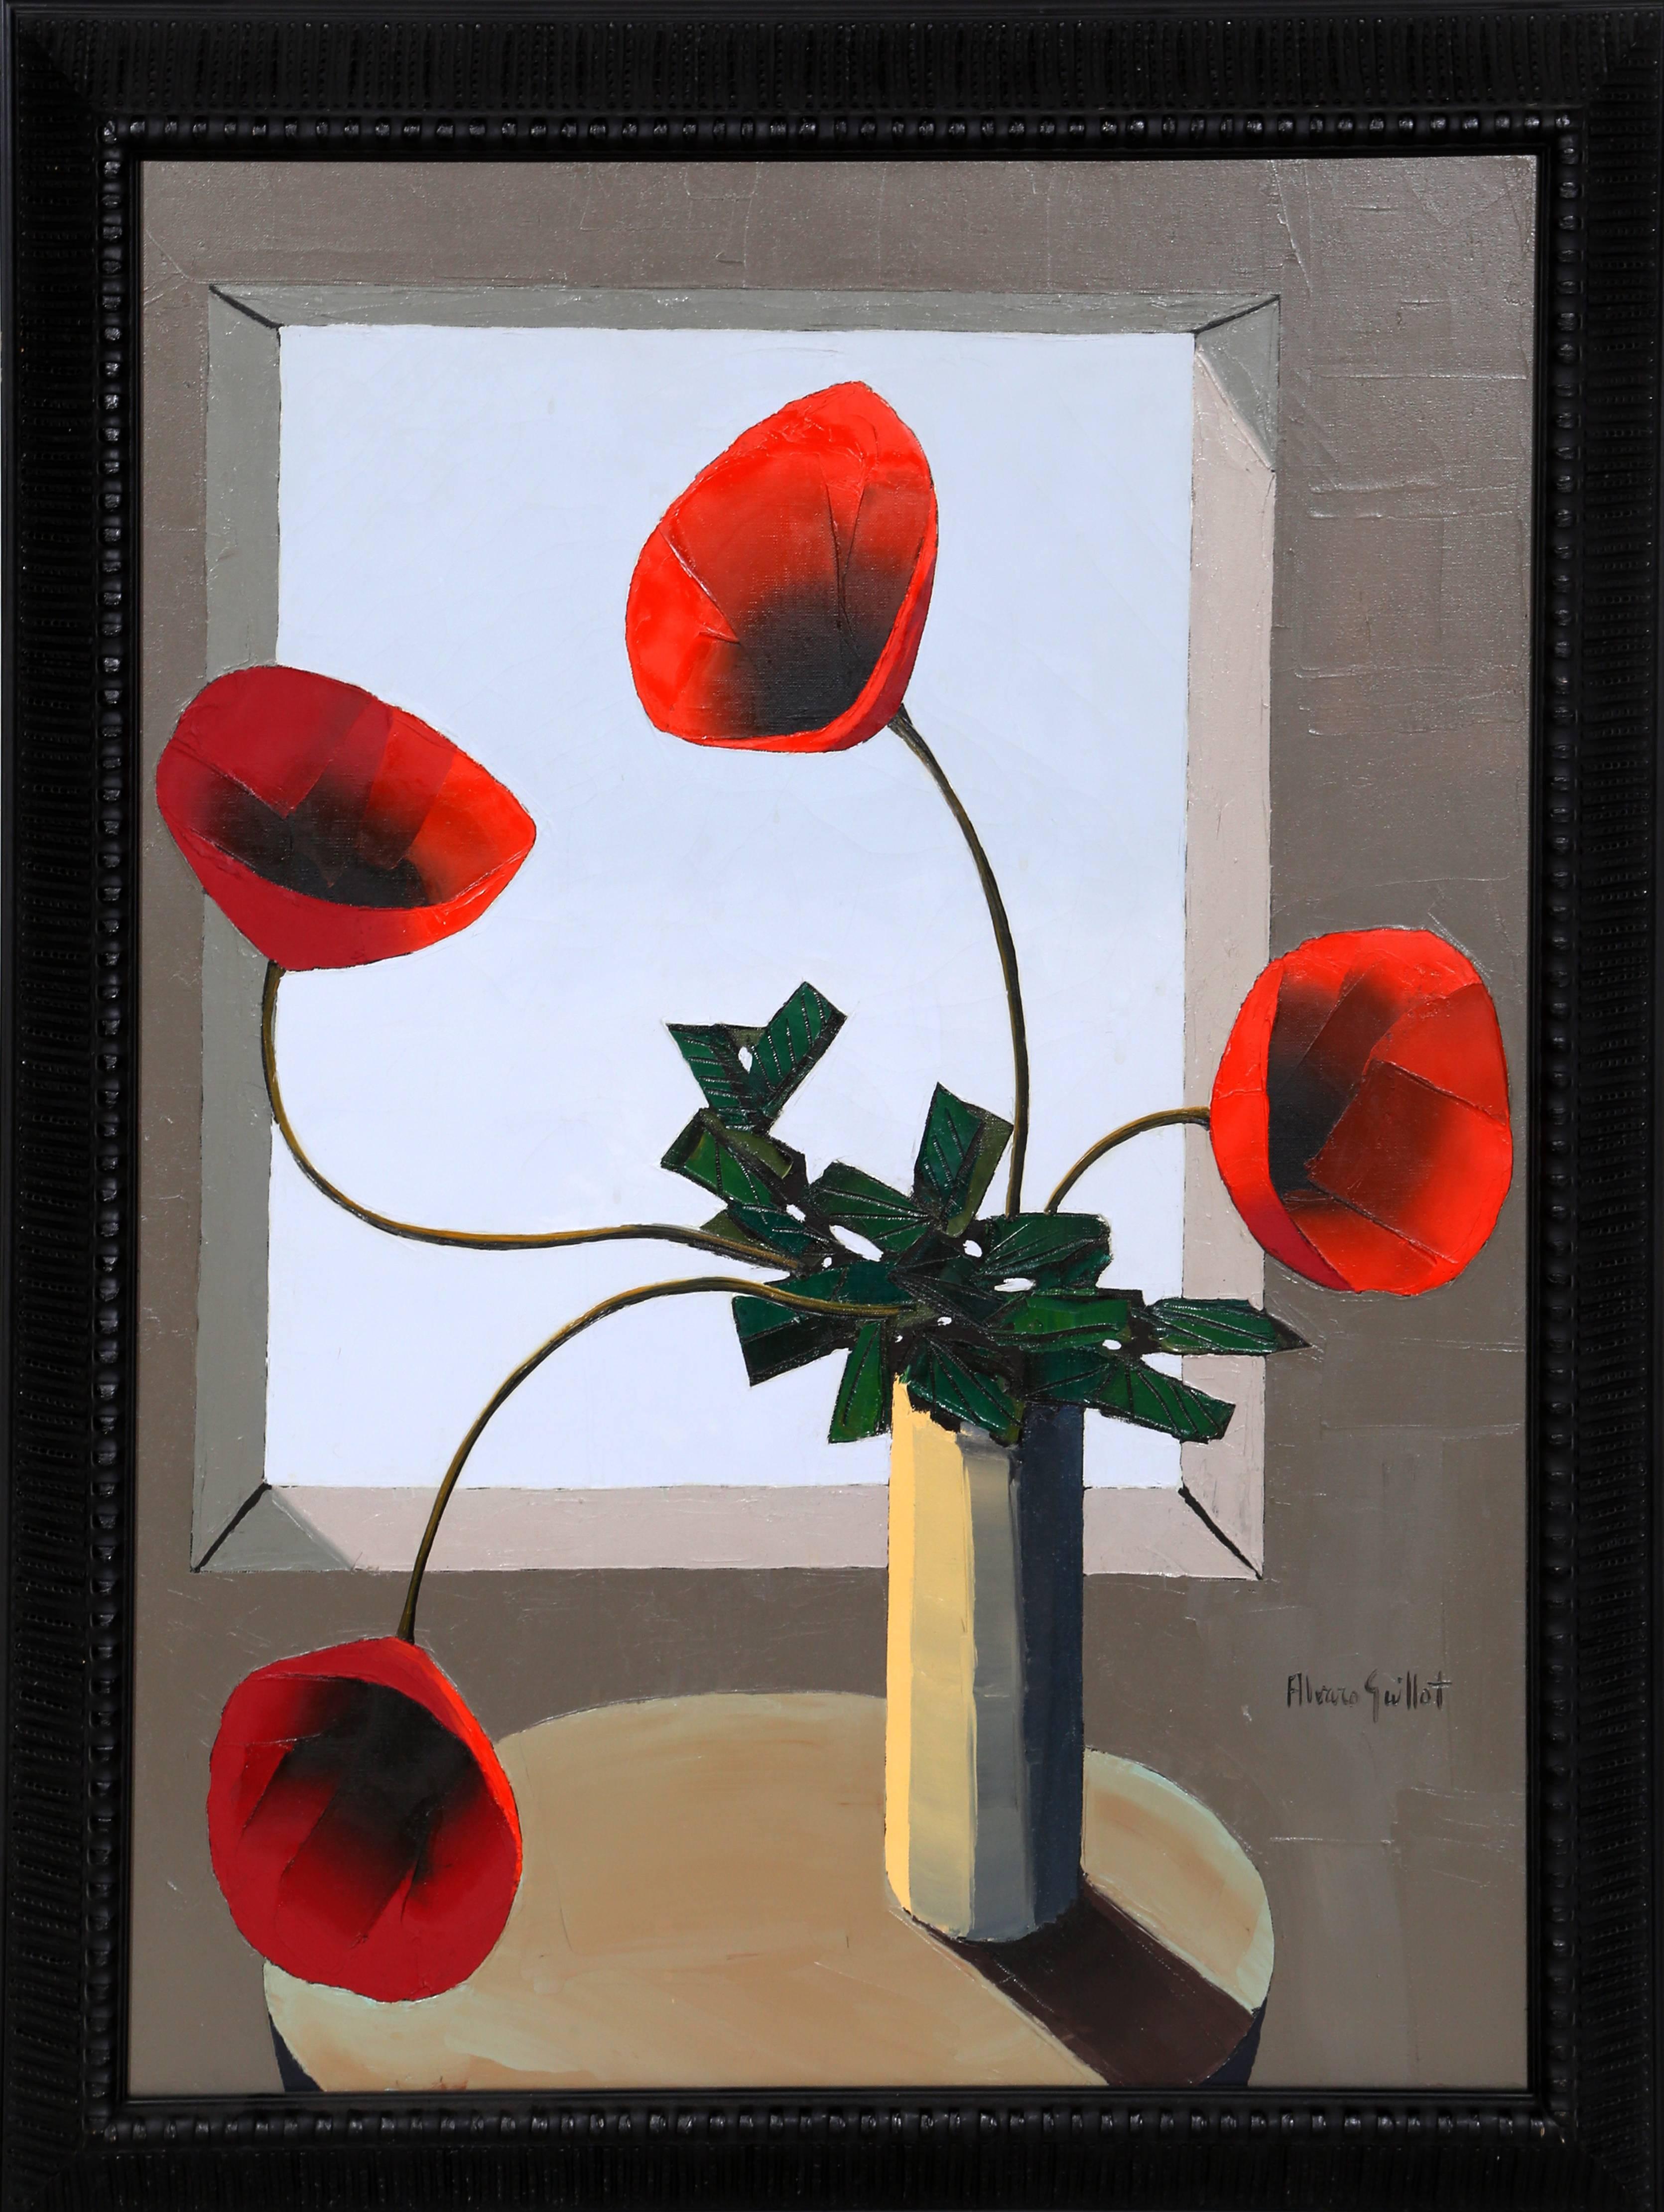 Artist: Alvaro Guillot, Uruguayan/American (1931 - 2010)
Title: Pot de Fleurs Rouges a la Fenetre
Year: 1967
Medium: Oil on Canvas, signed l.r.
Size: 30 x 24 inches
Frame Size: 31 x 25 inches 